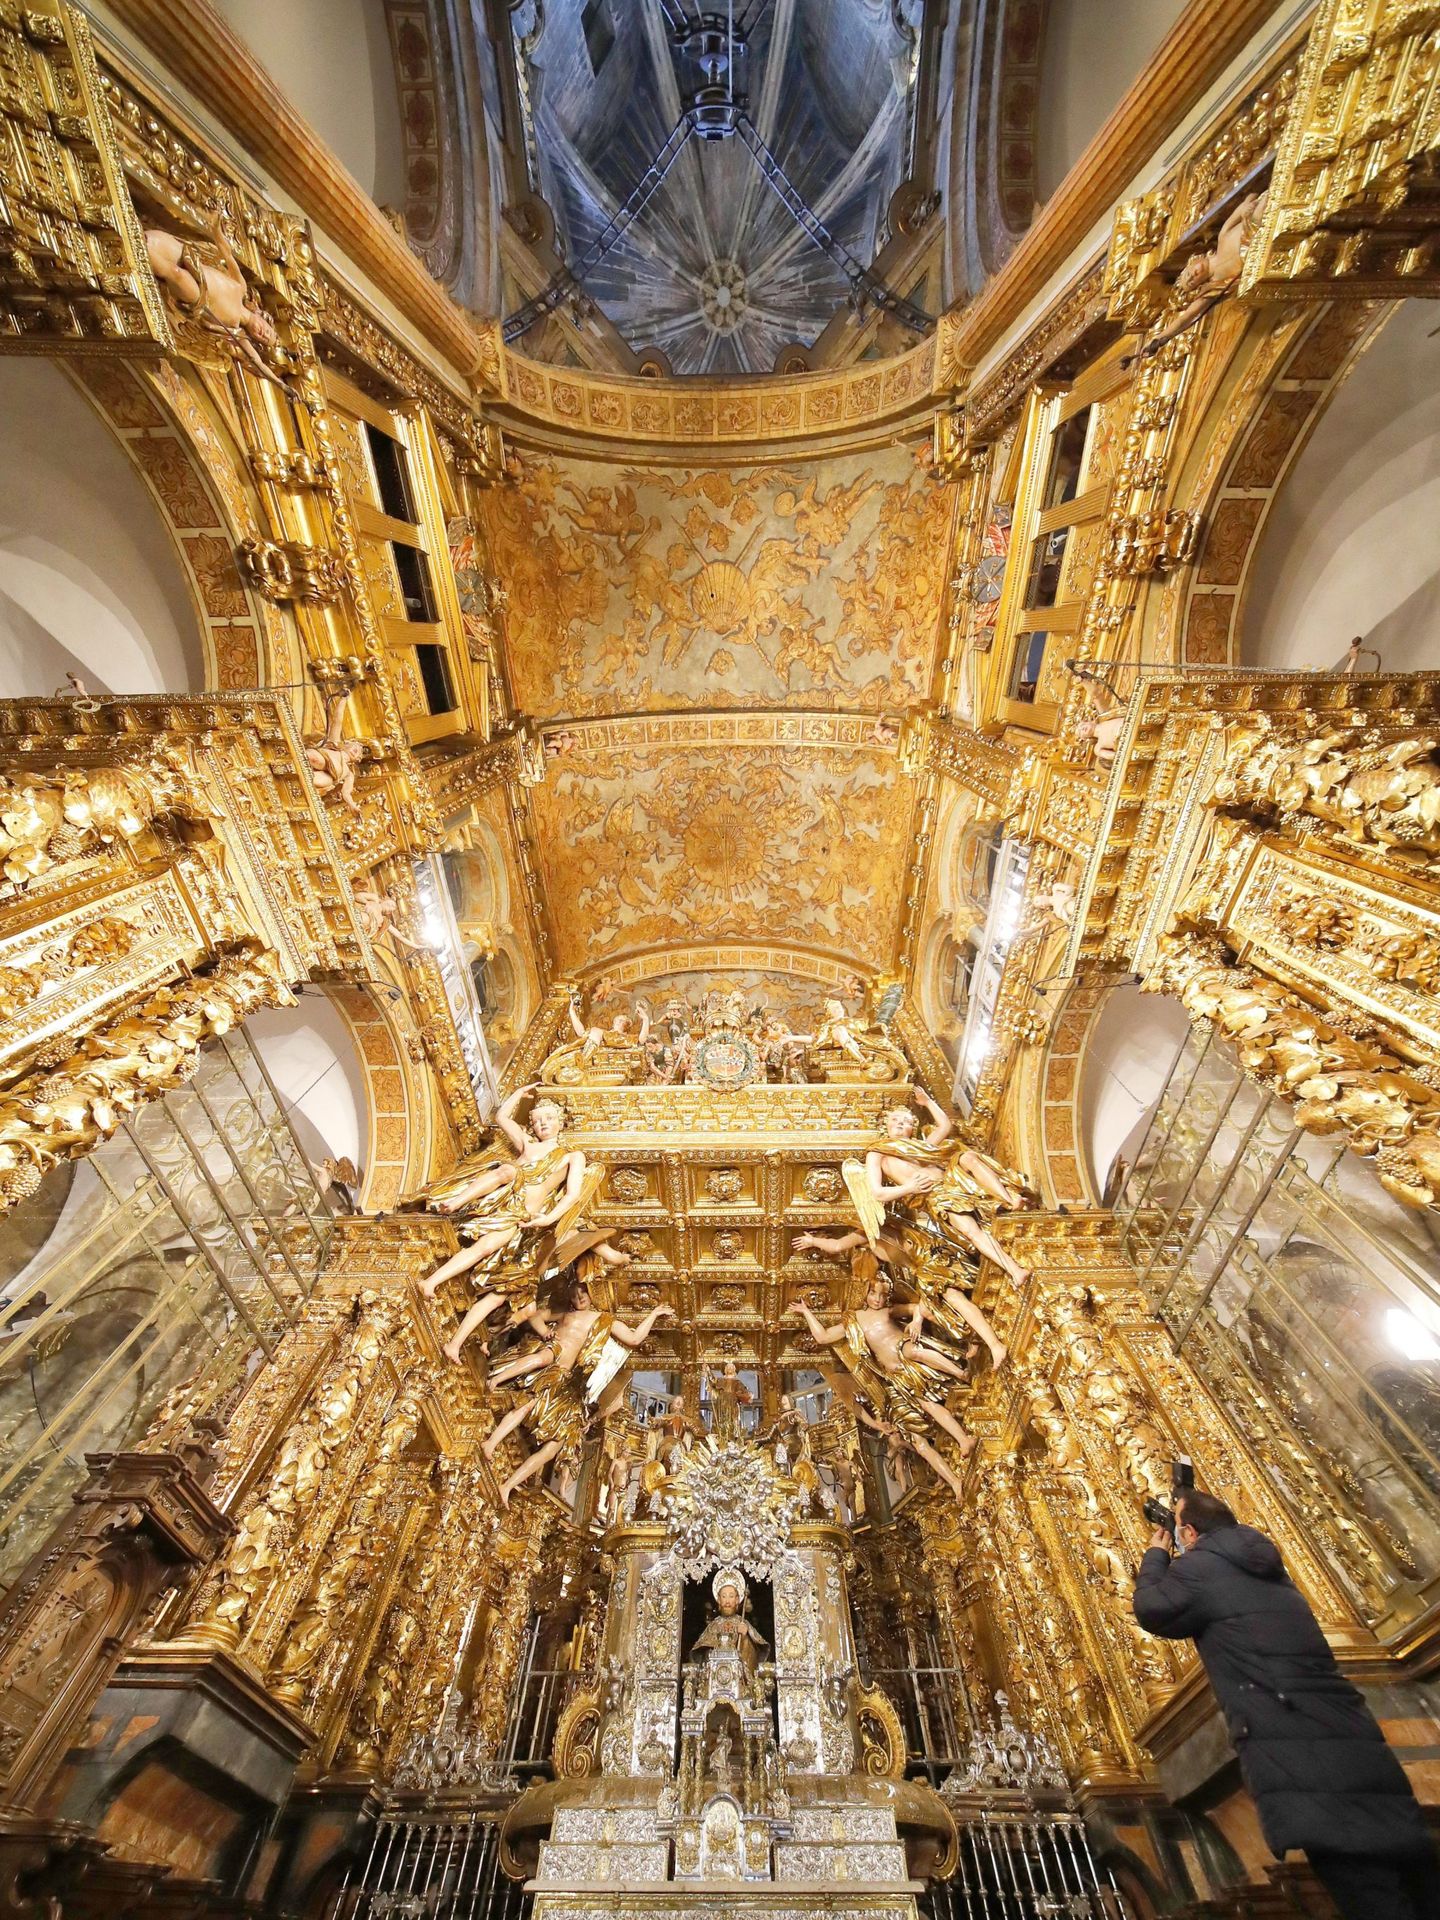 El altar de la catedral de Santiago de Compostela. (EFE/Lavandeira Jr)